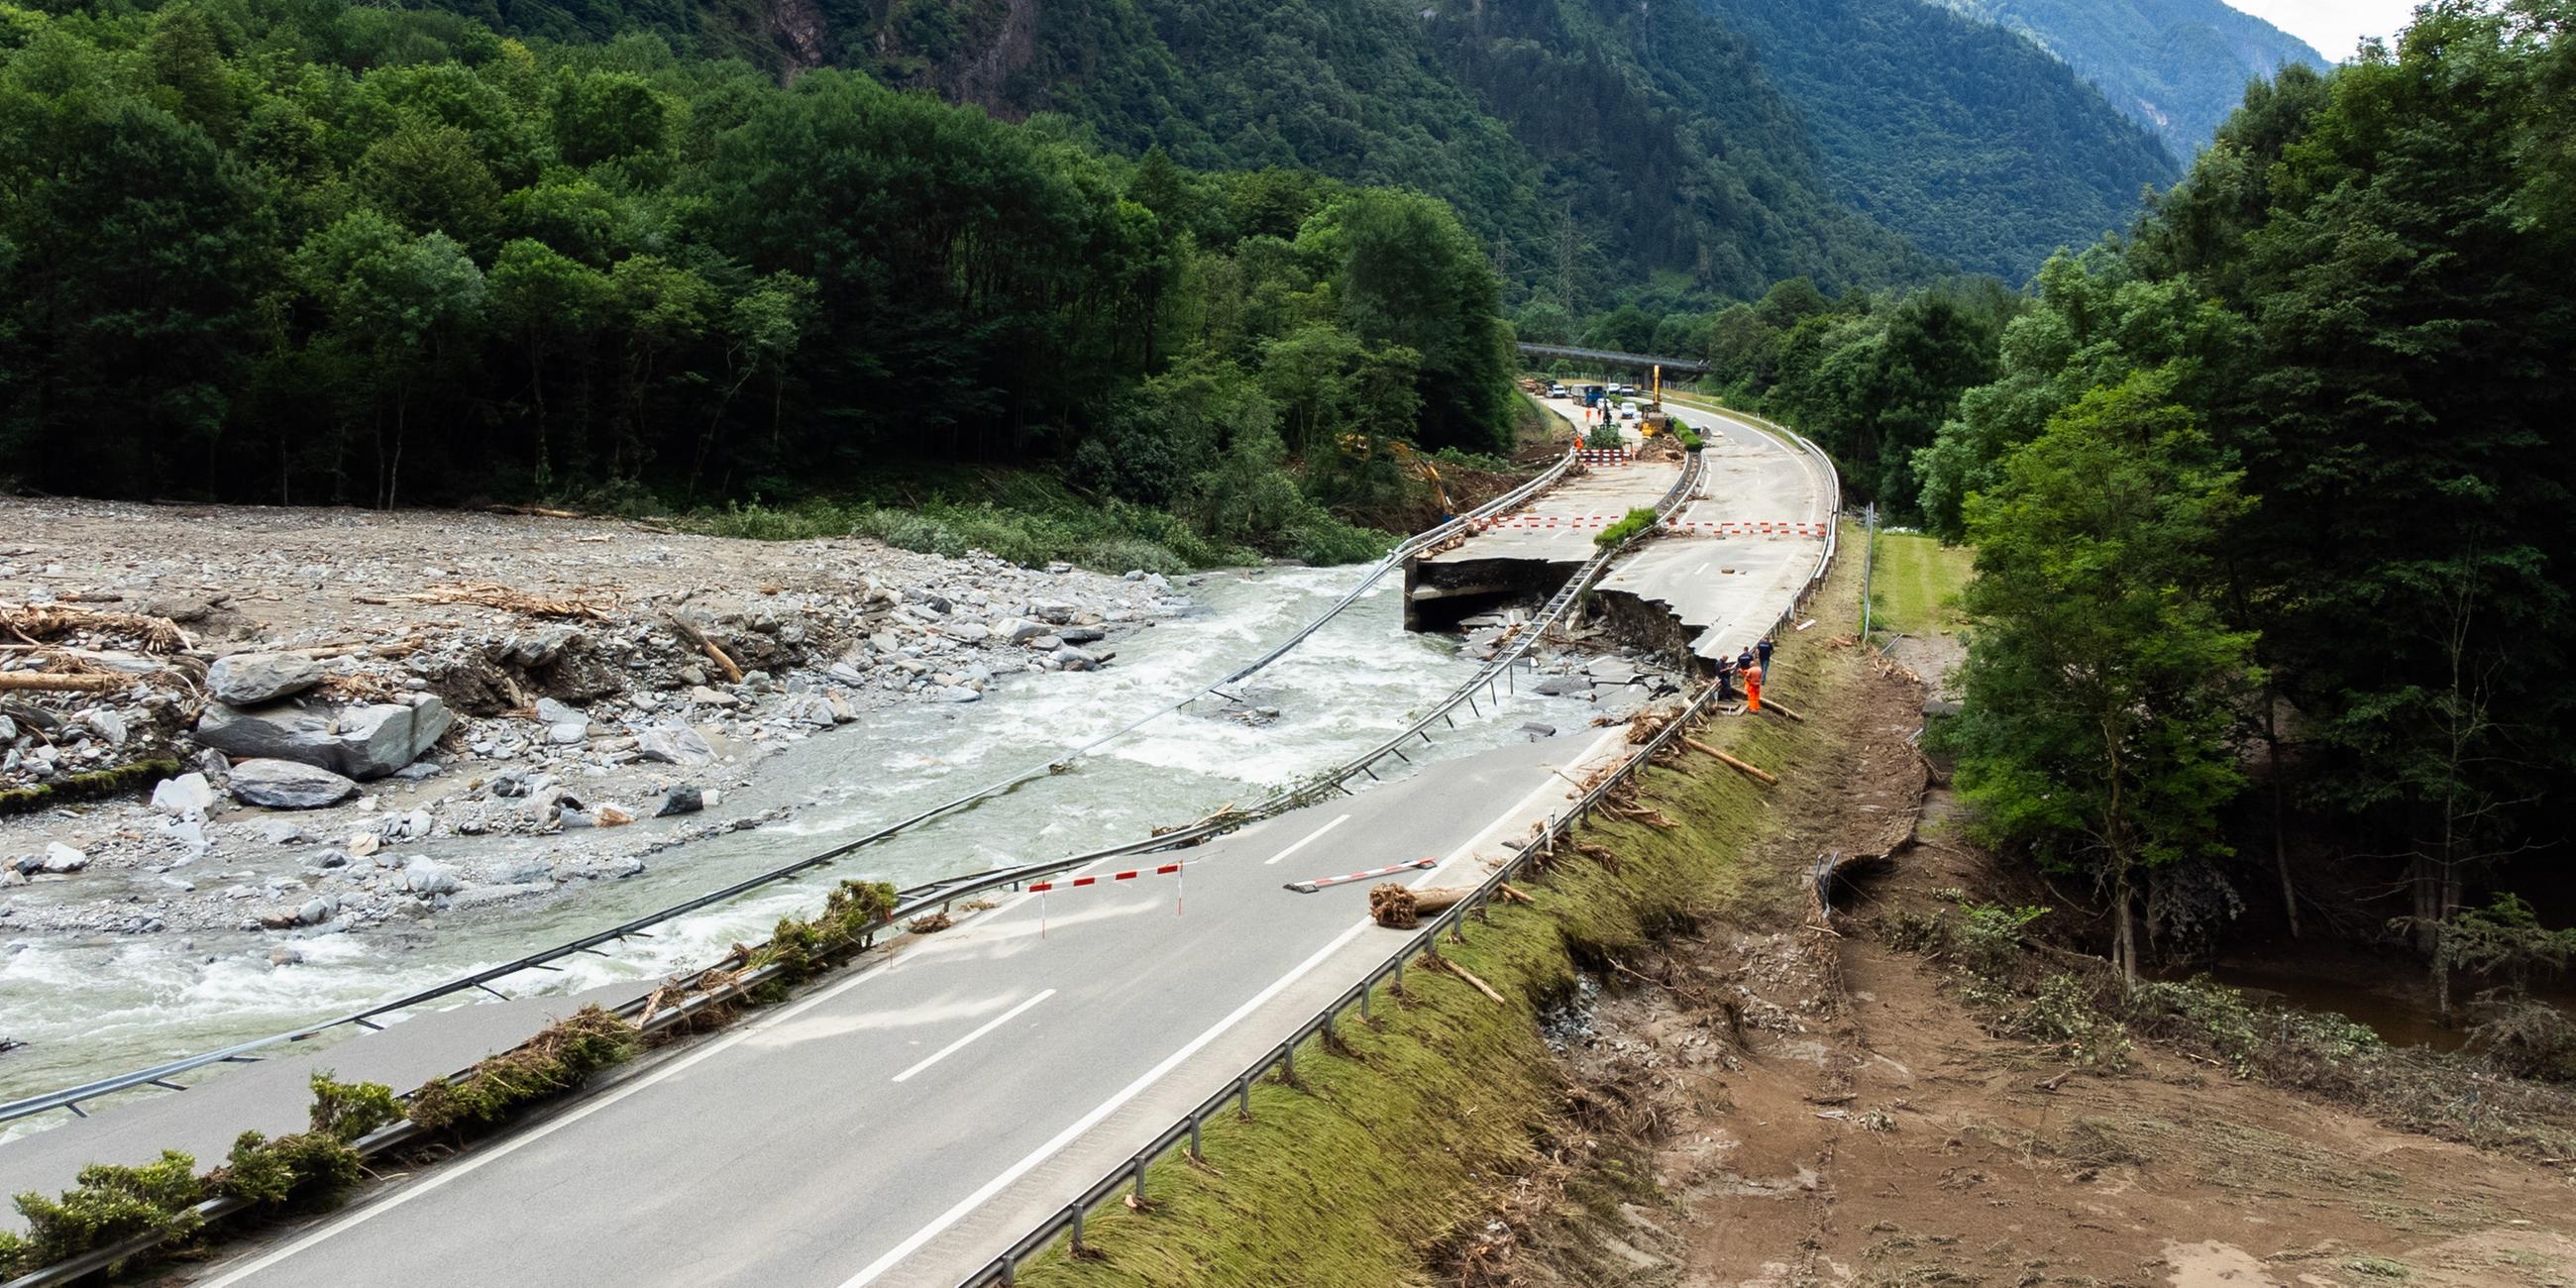 Repair works following heavy rain in Switzerland's Misox valley